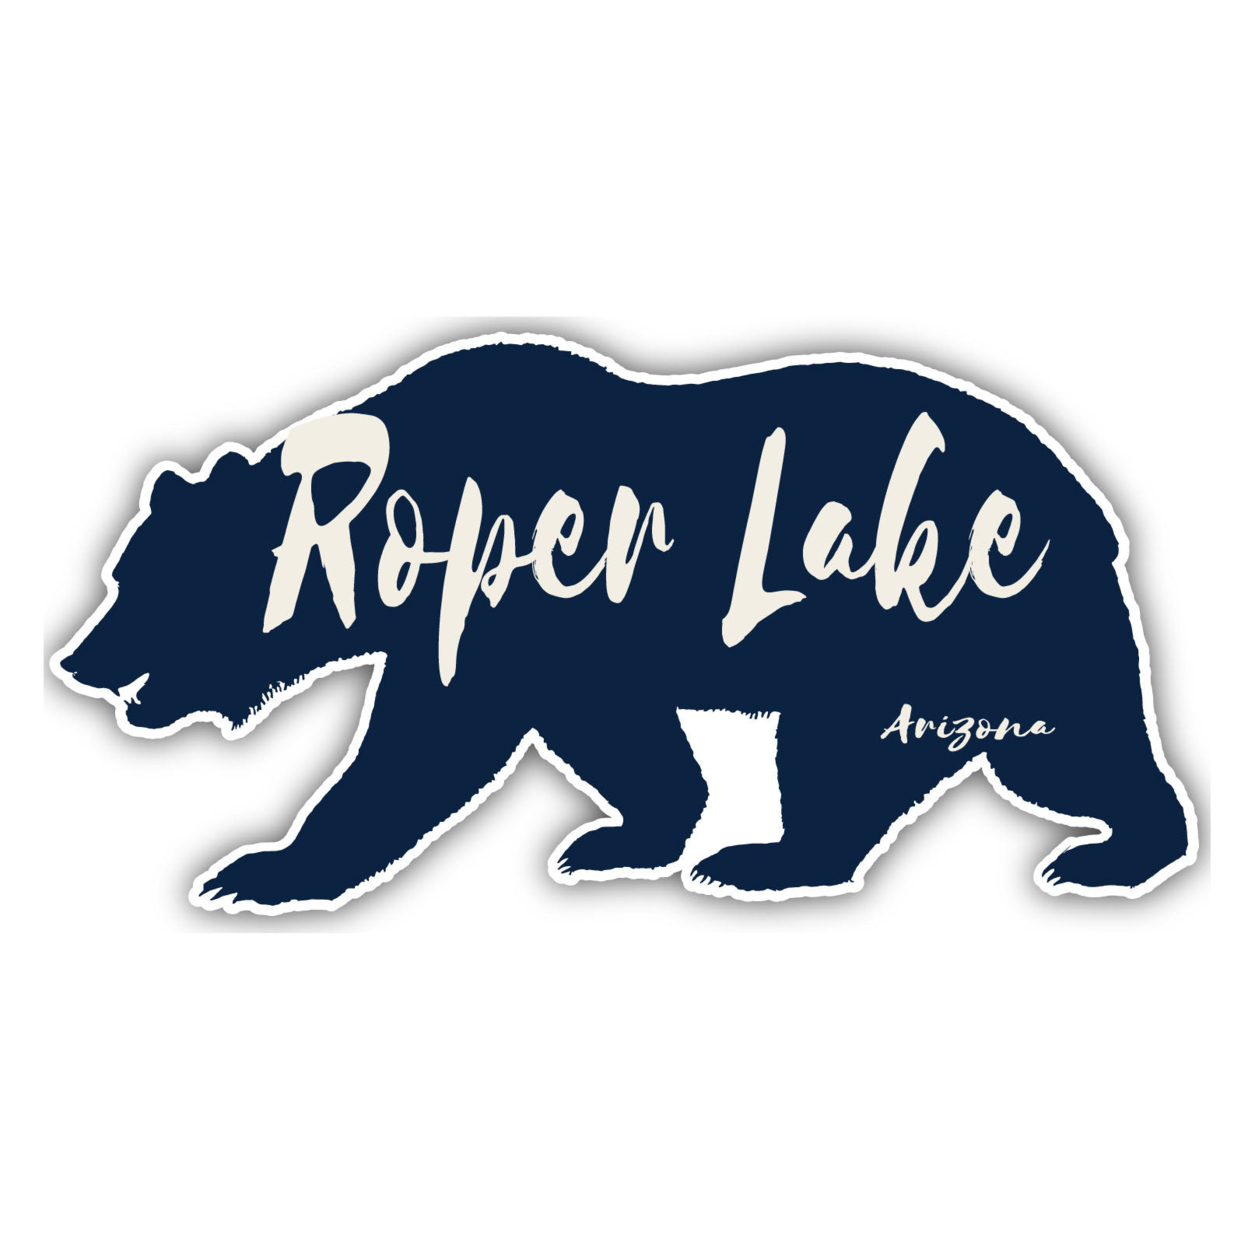 Roper Lake Arizona Souvenir Decorative Stickers (Choose Theme And Size) - Single Unit, 2-Inch, Camp Life